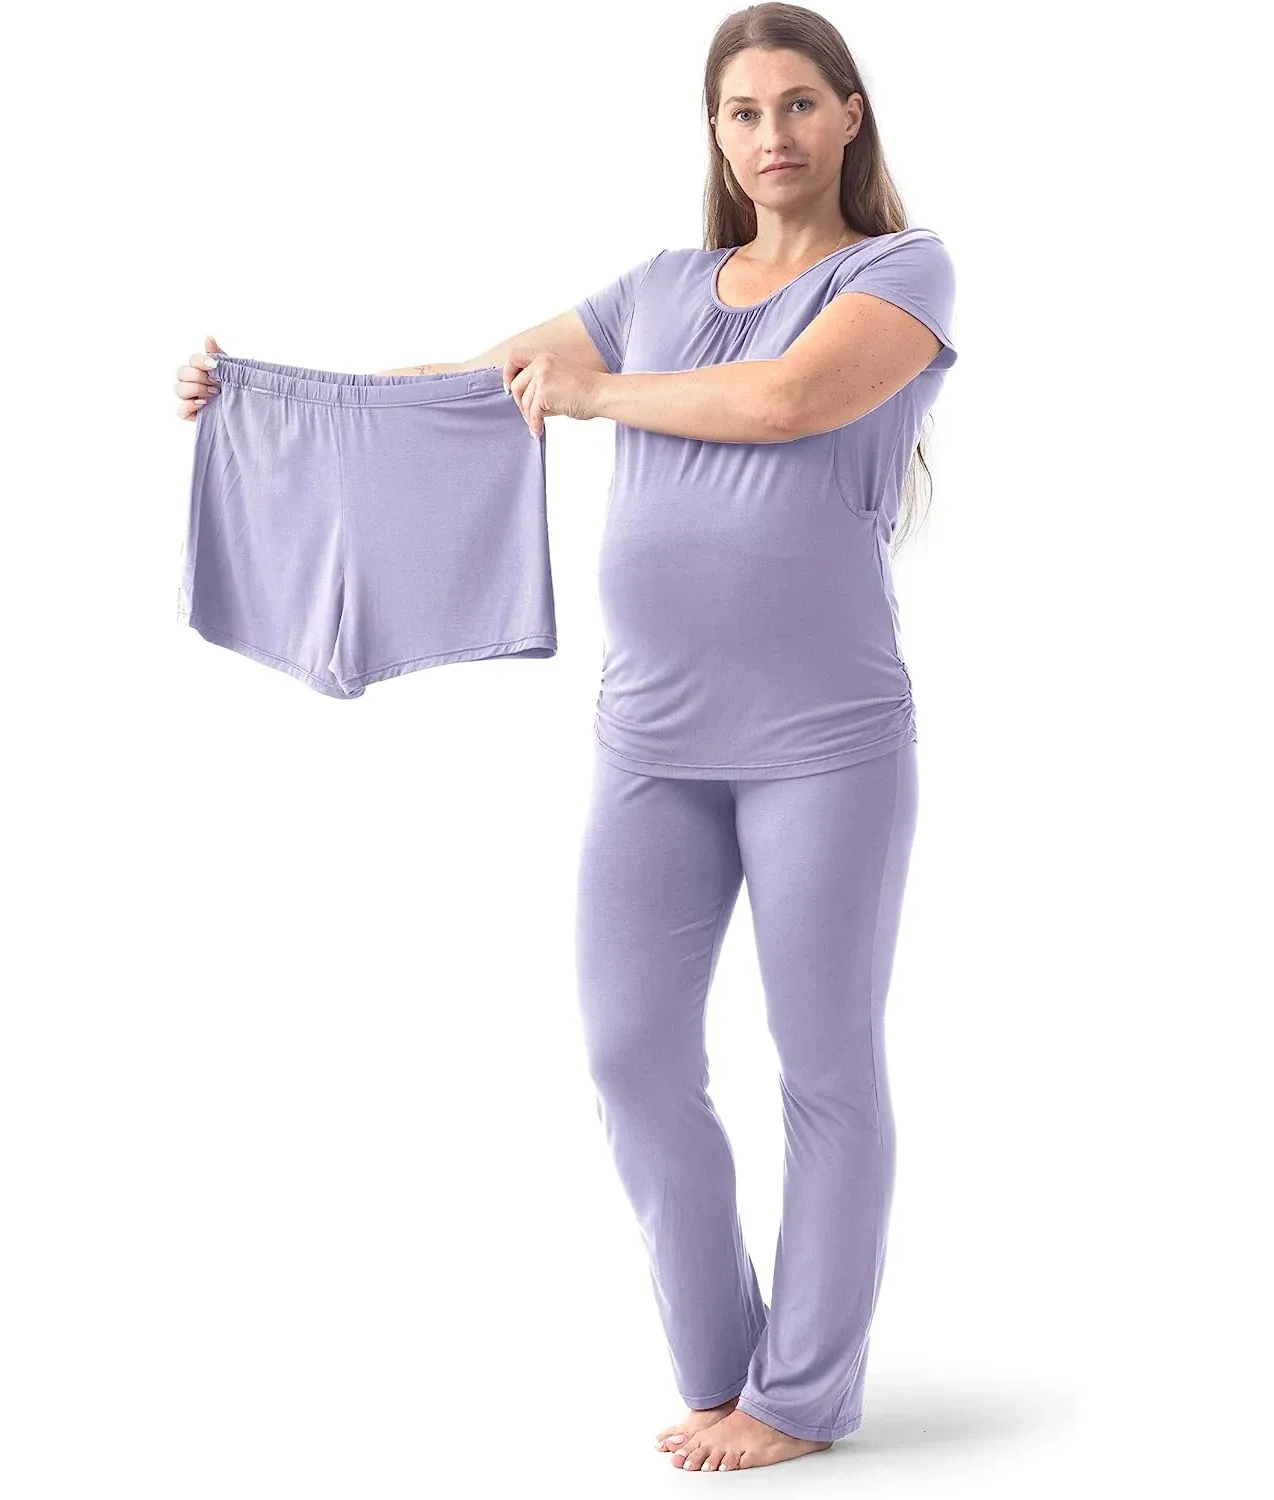 Hot Lactation Maternity And Breastfeeding Pajamas 3Pcs Pregnant Night Wear Cotton Hospital Women Feeding Nursing Sleepwear